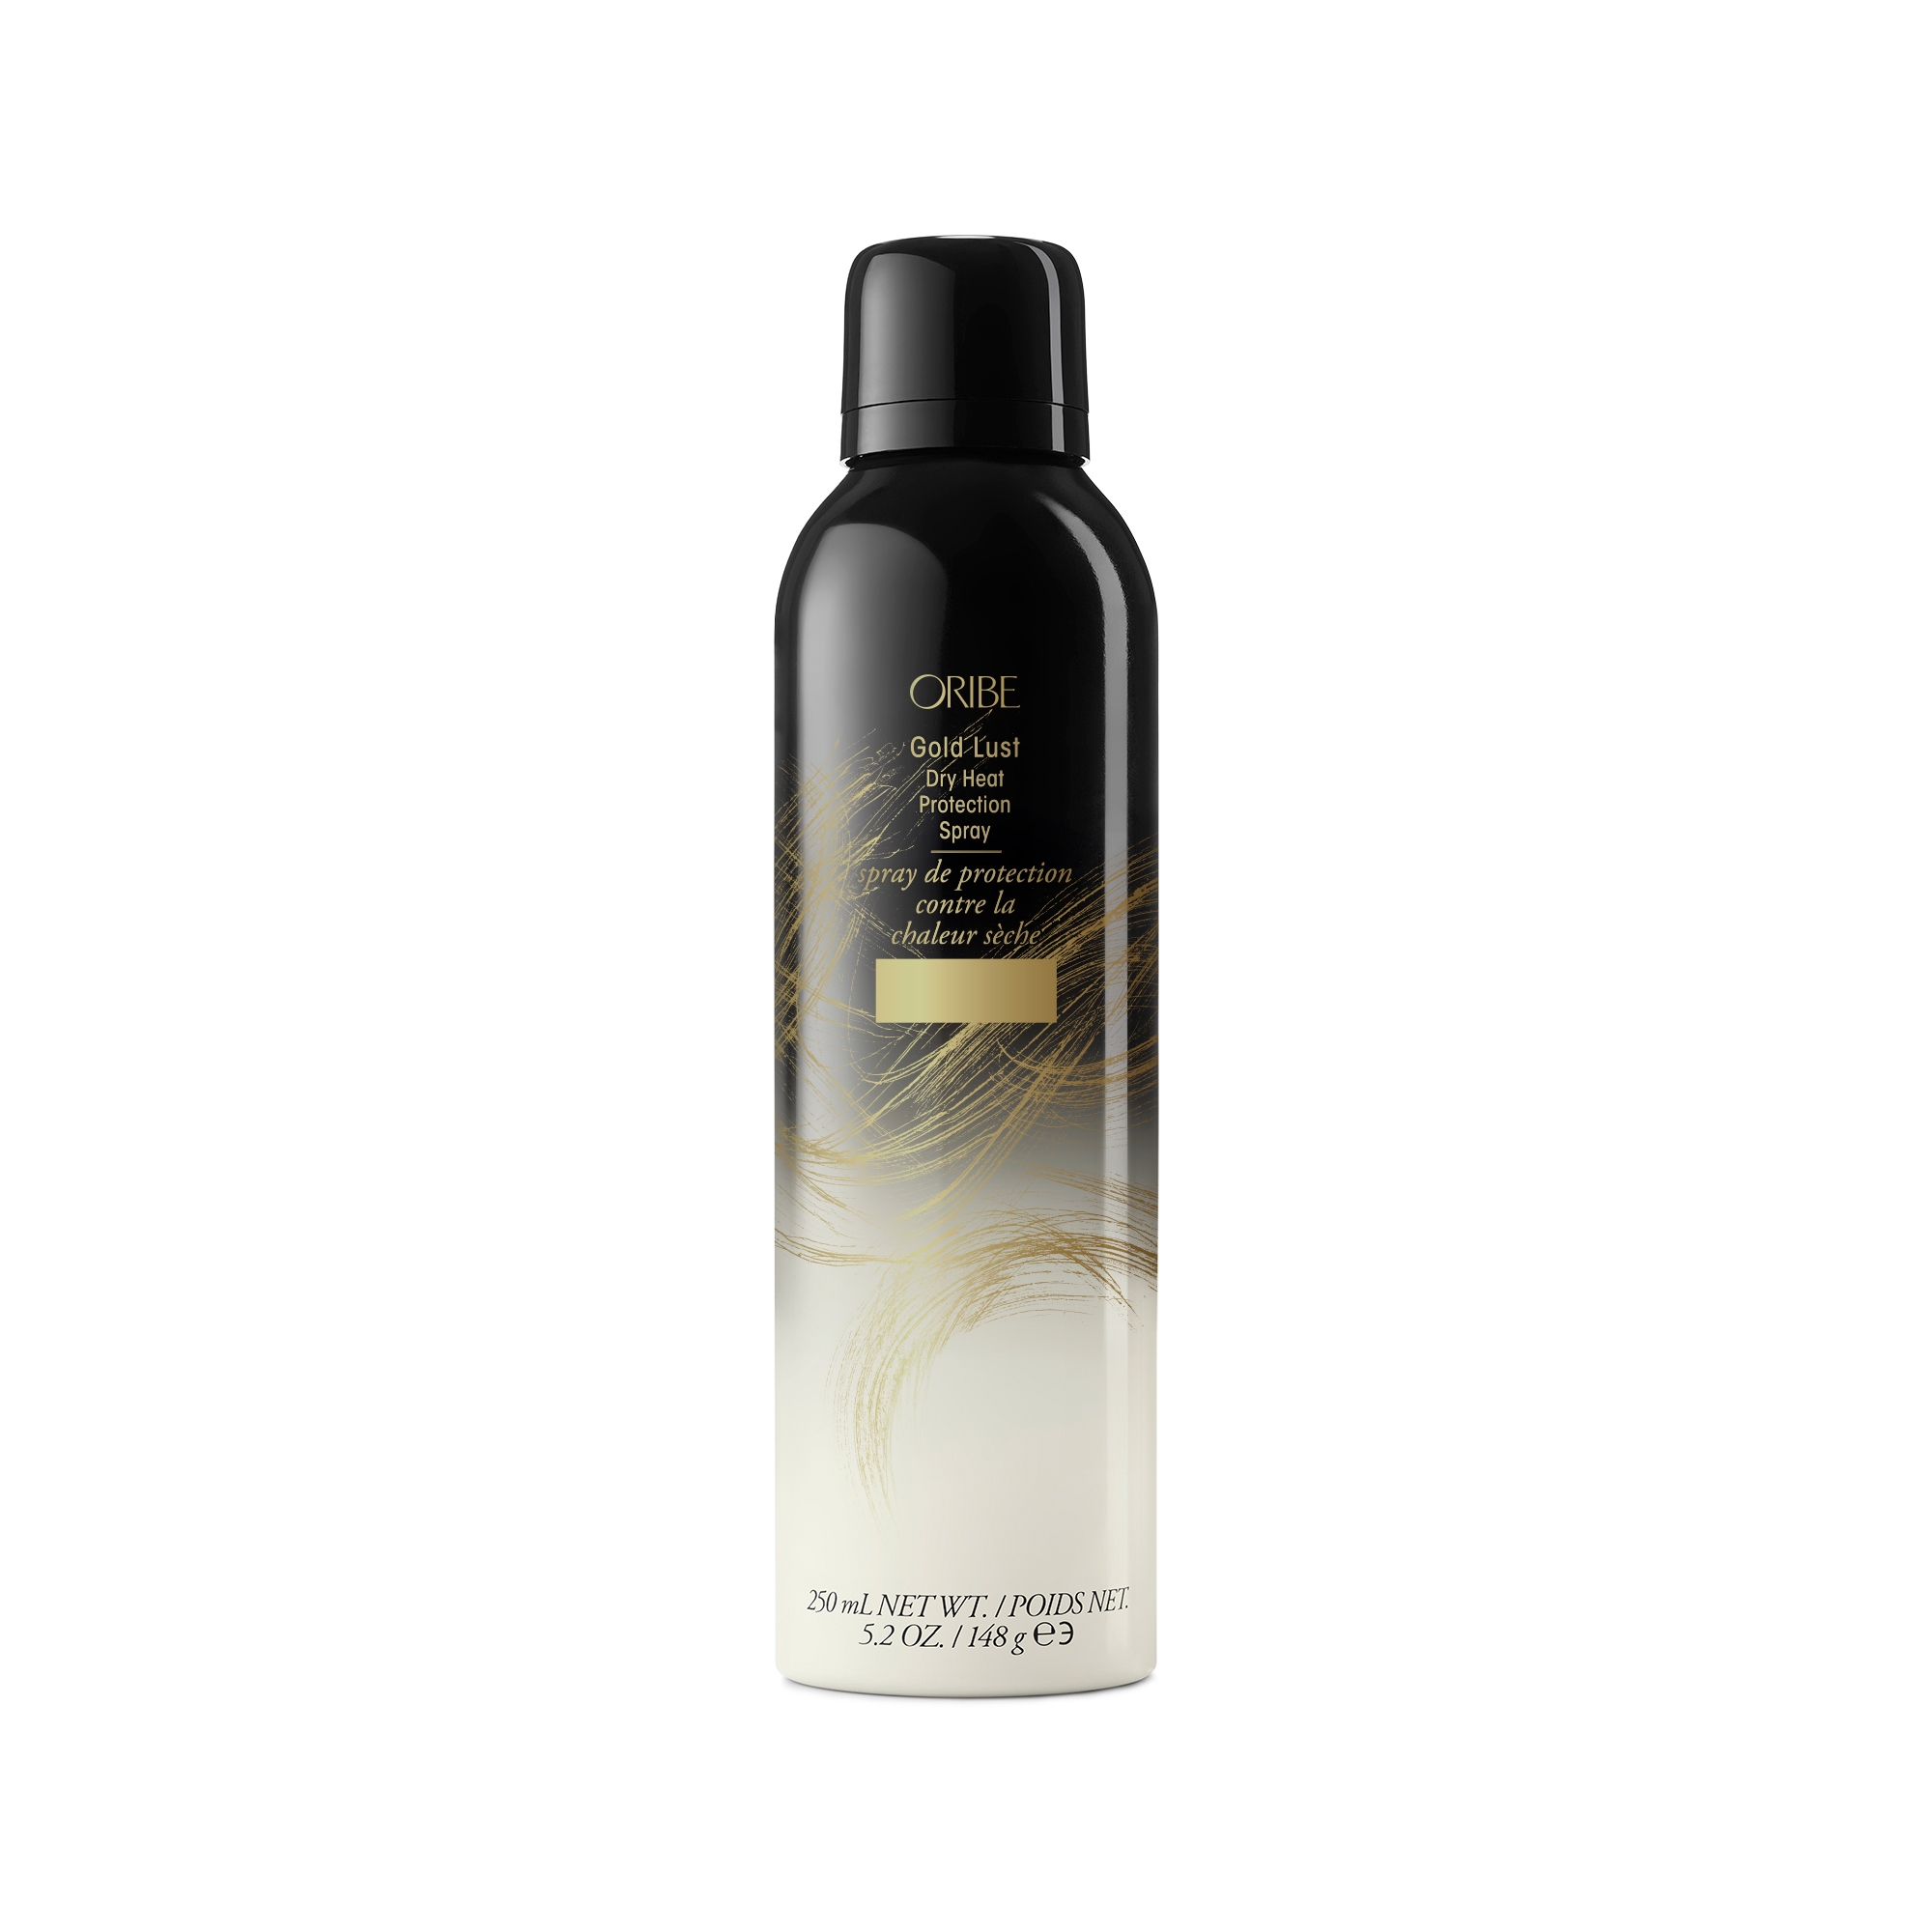 Image du produit de Oribe Care - Gold Lust Dry Heat Protection Spray